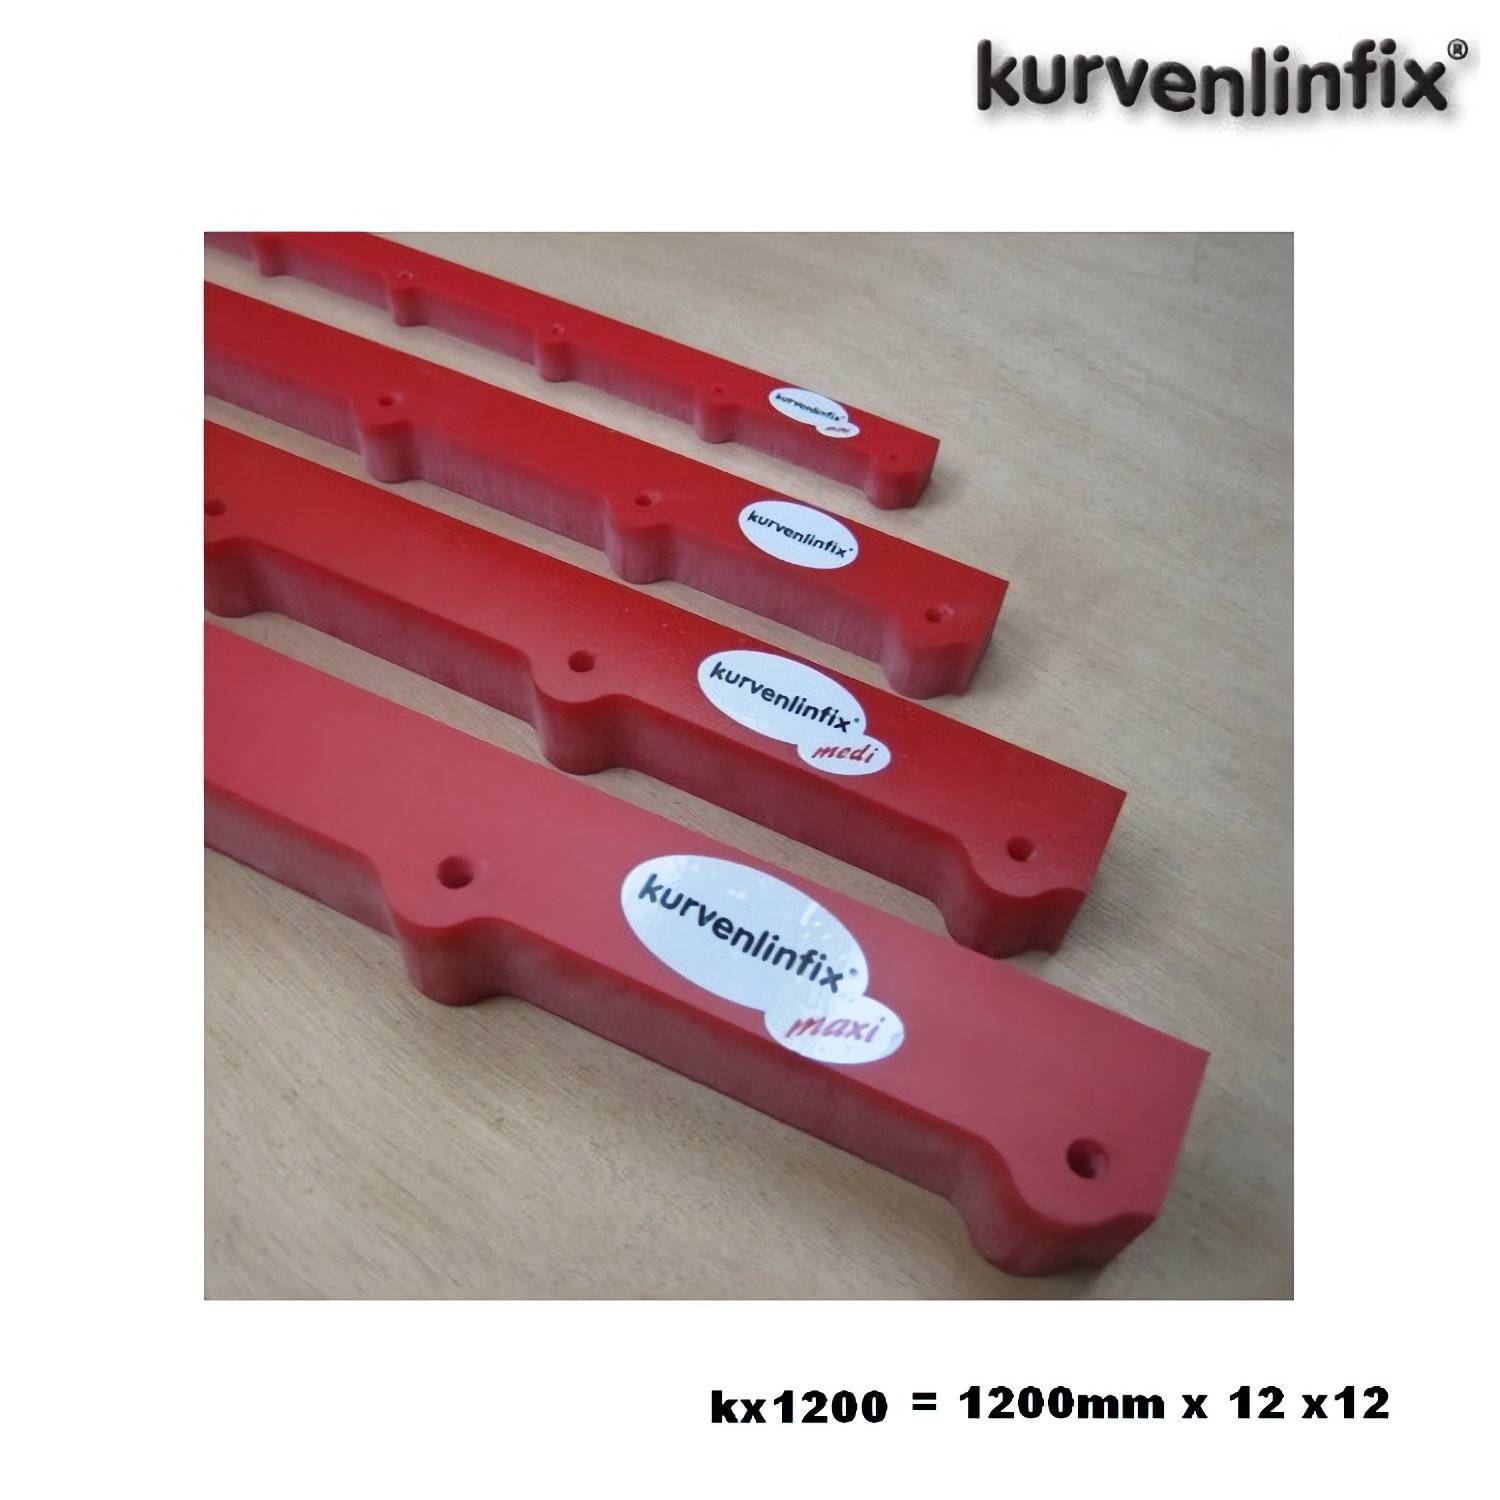 kurvenlinfix-kx1200